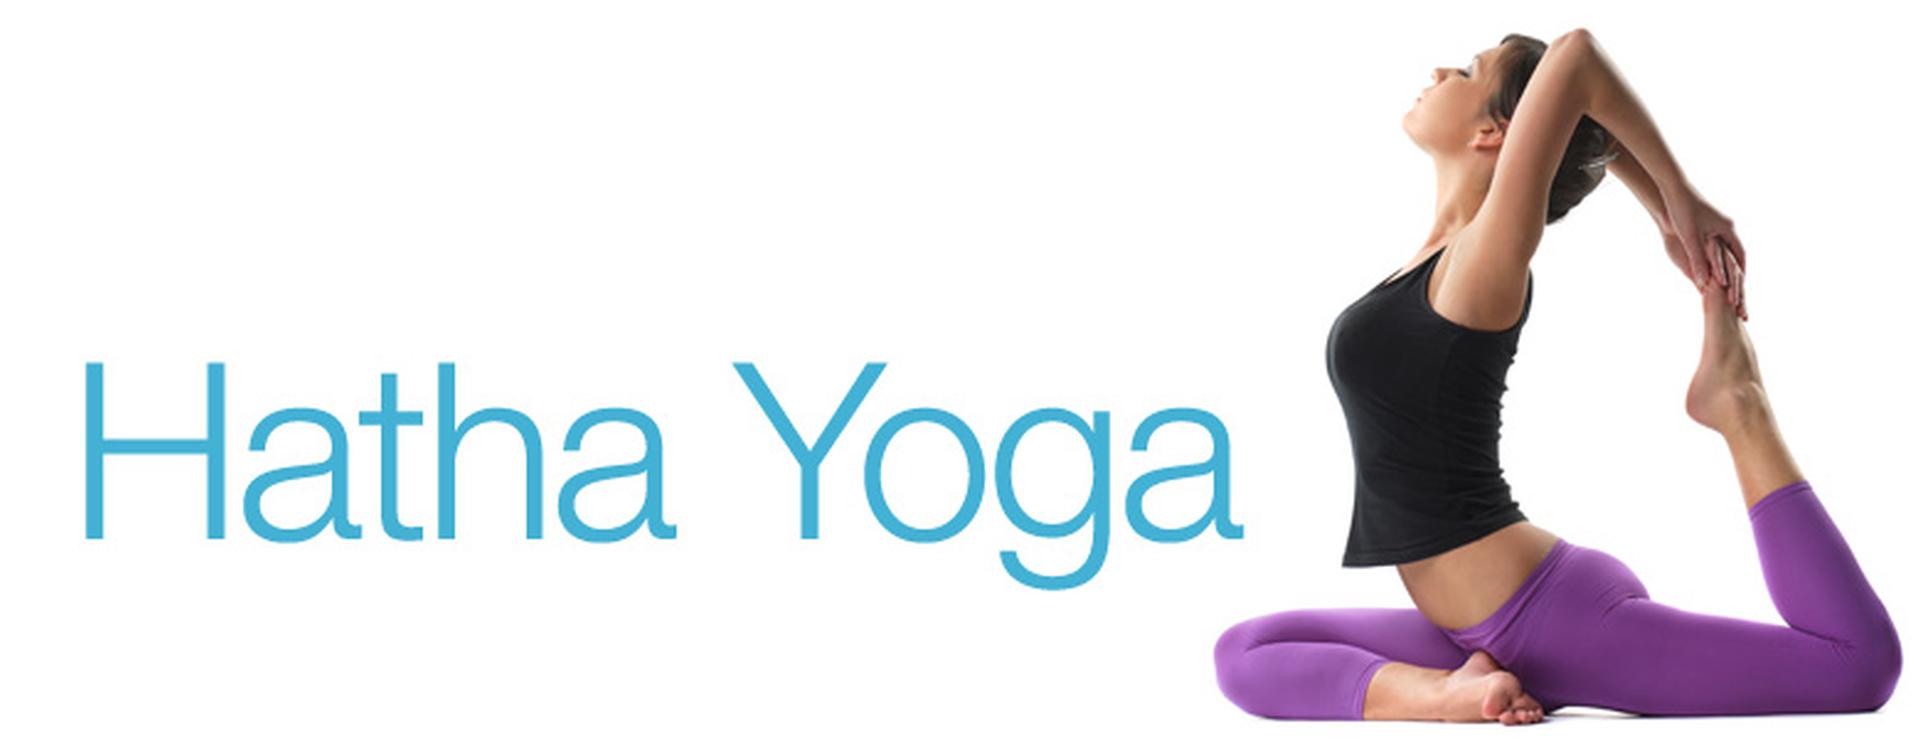 How is Hatha Yoga different from Bikram Yoga? 10